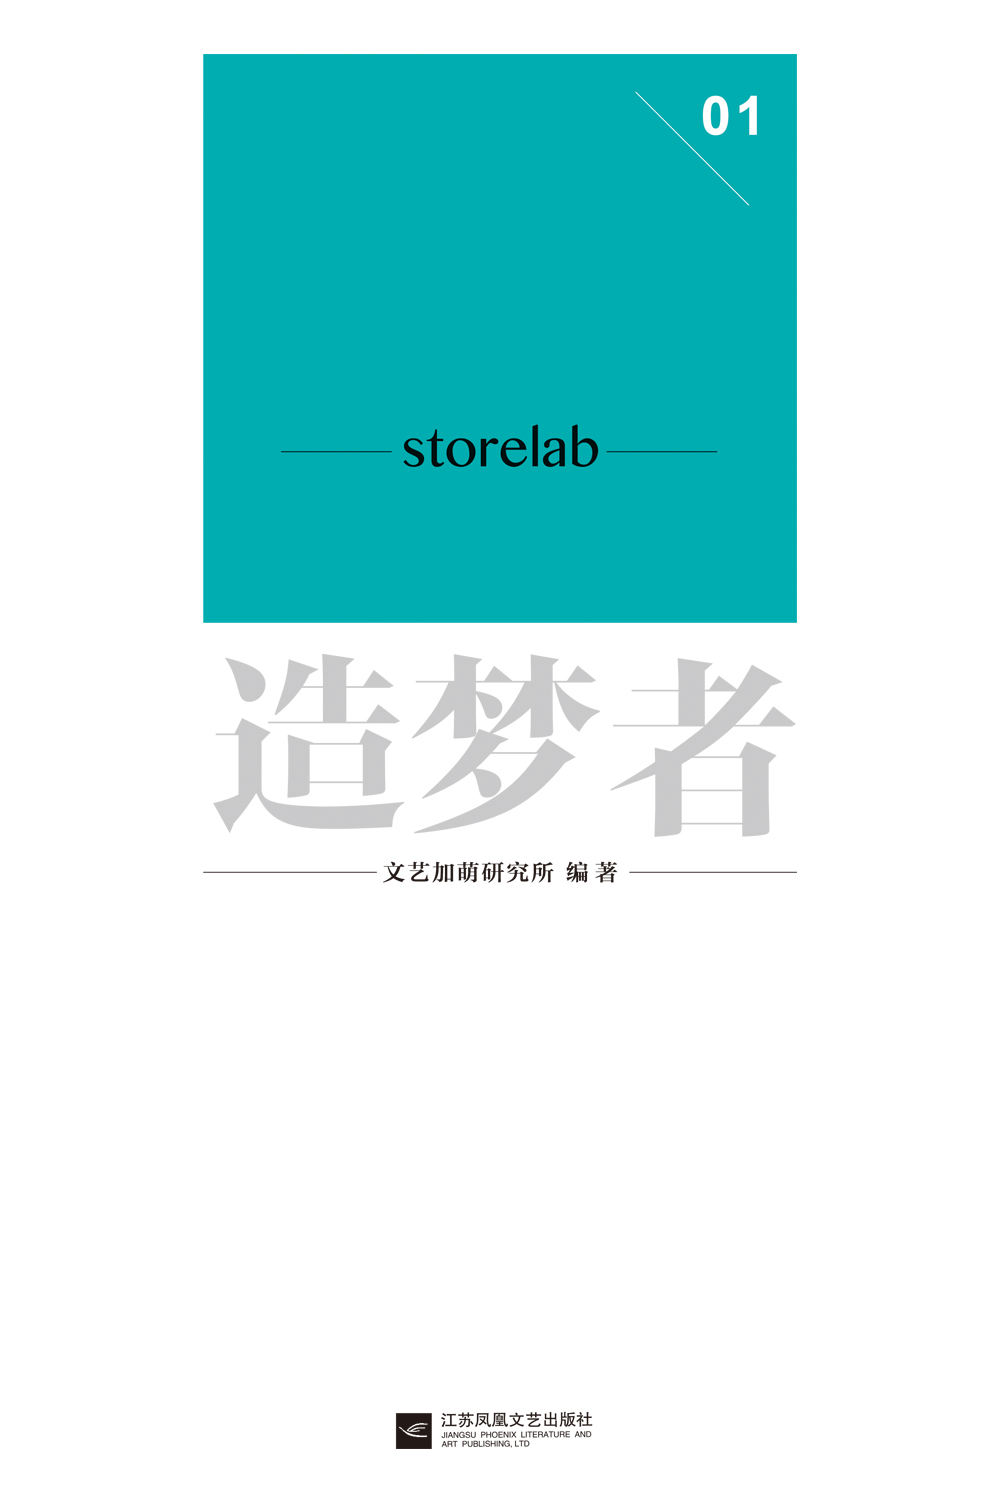 Storelab, Baobao&Linehouse, May 2016